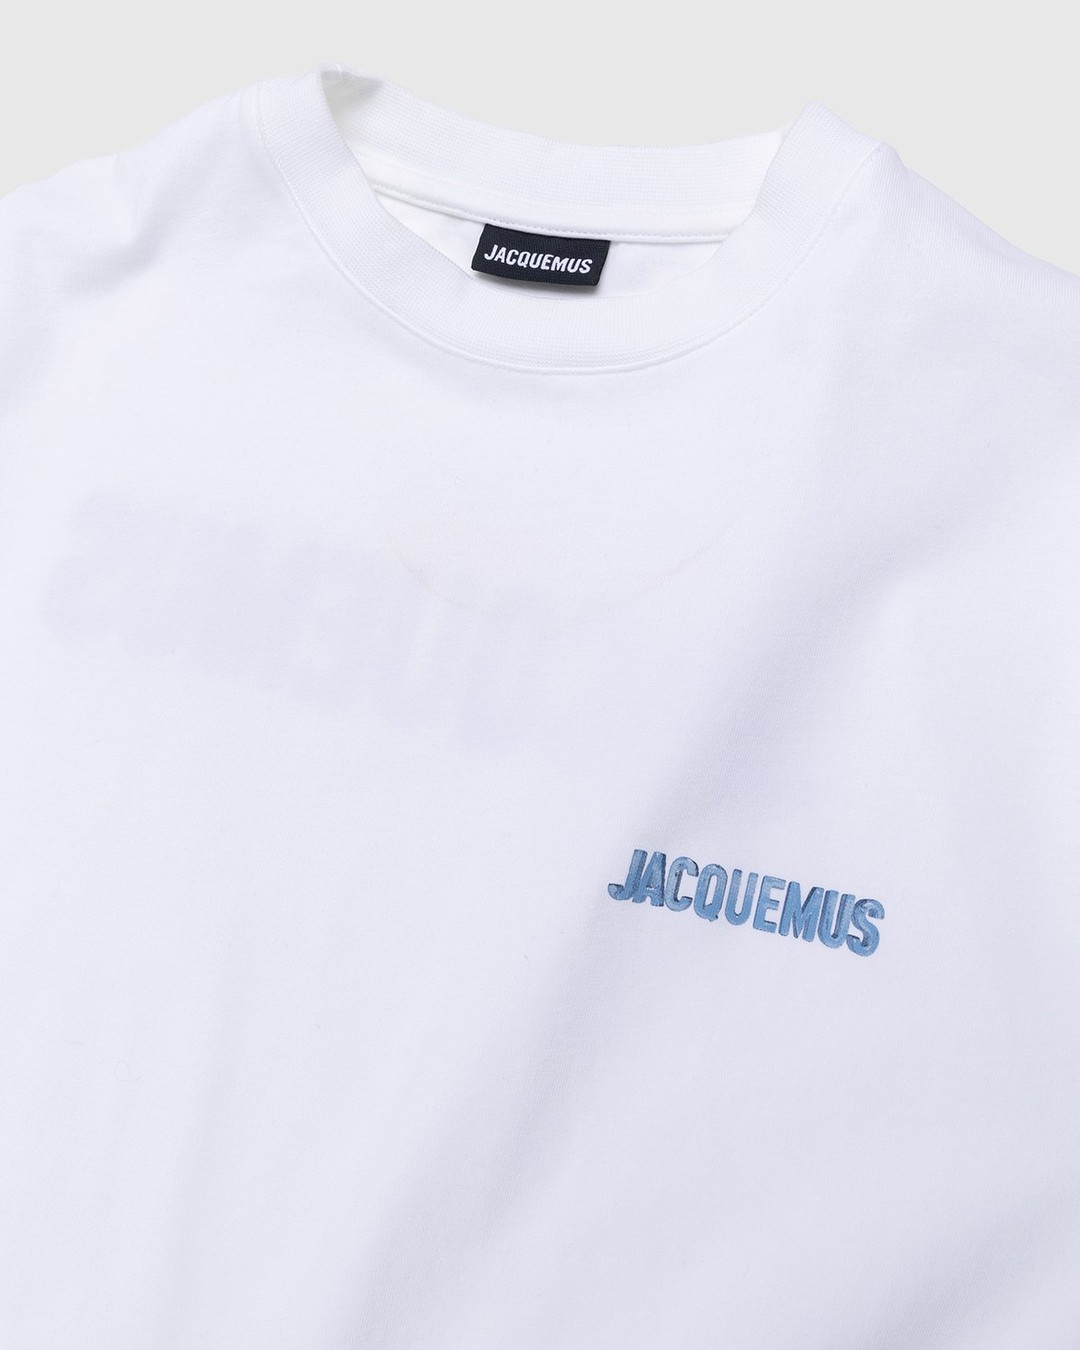 JACQUEMUS – Le T-Shirt Gelo Print Ice Jacquemus White - Tops - White - Image 3